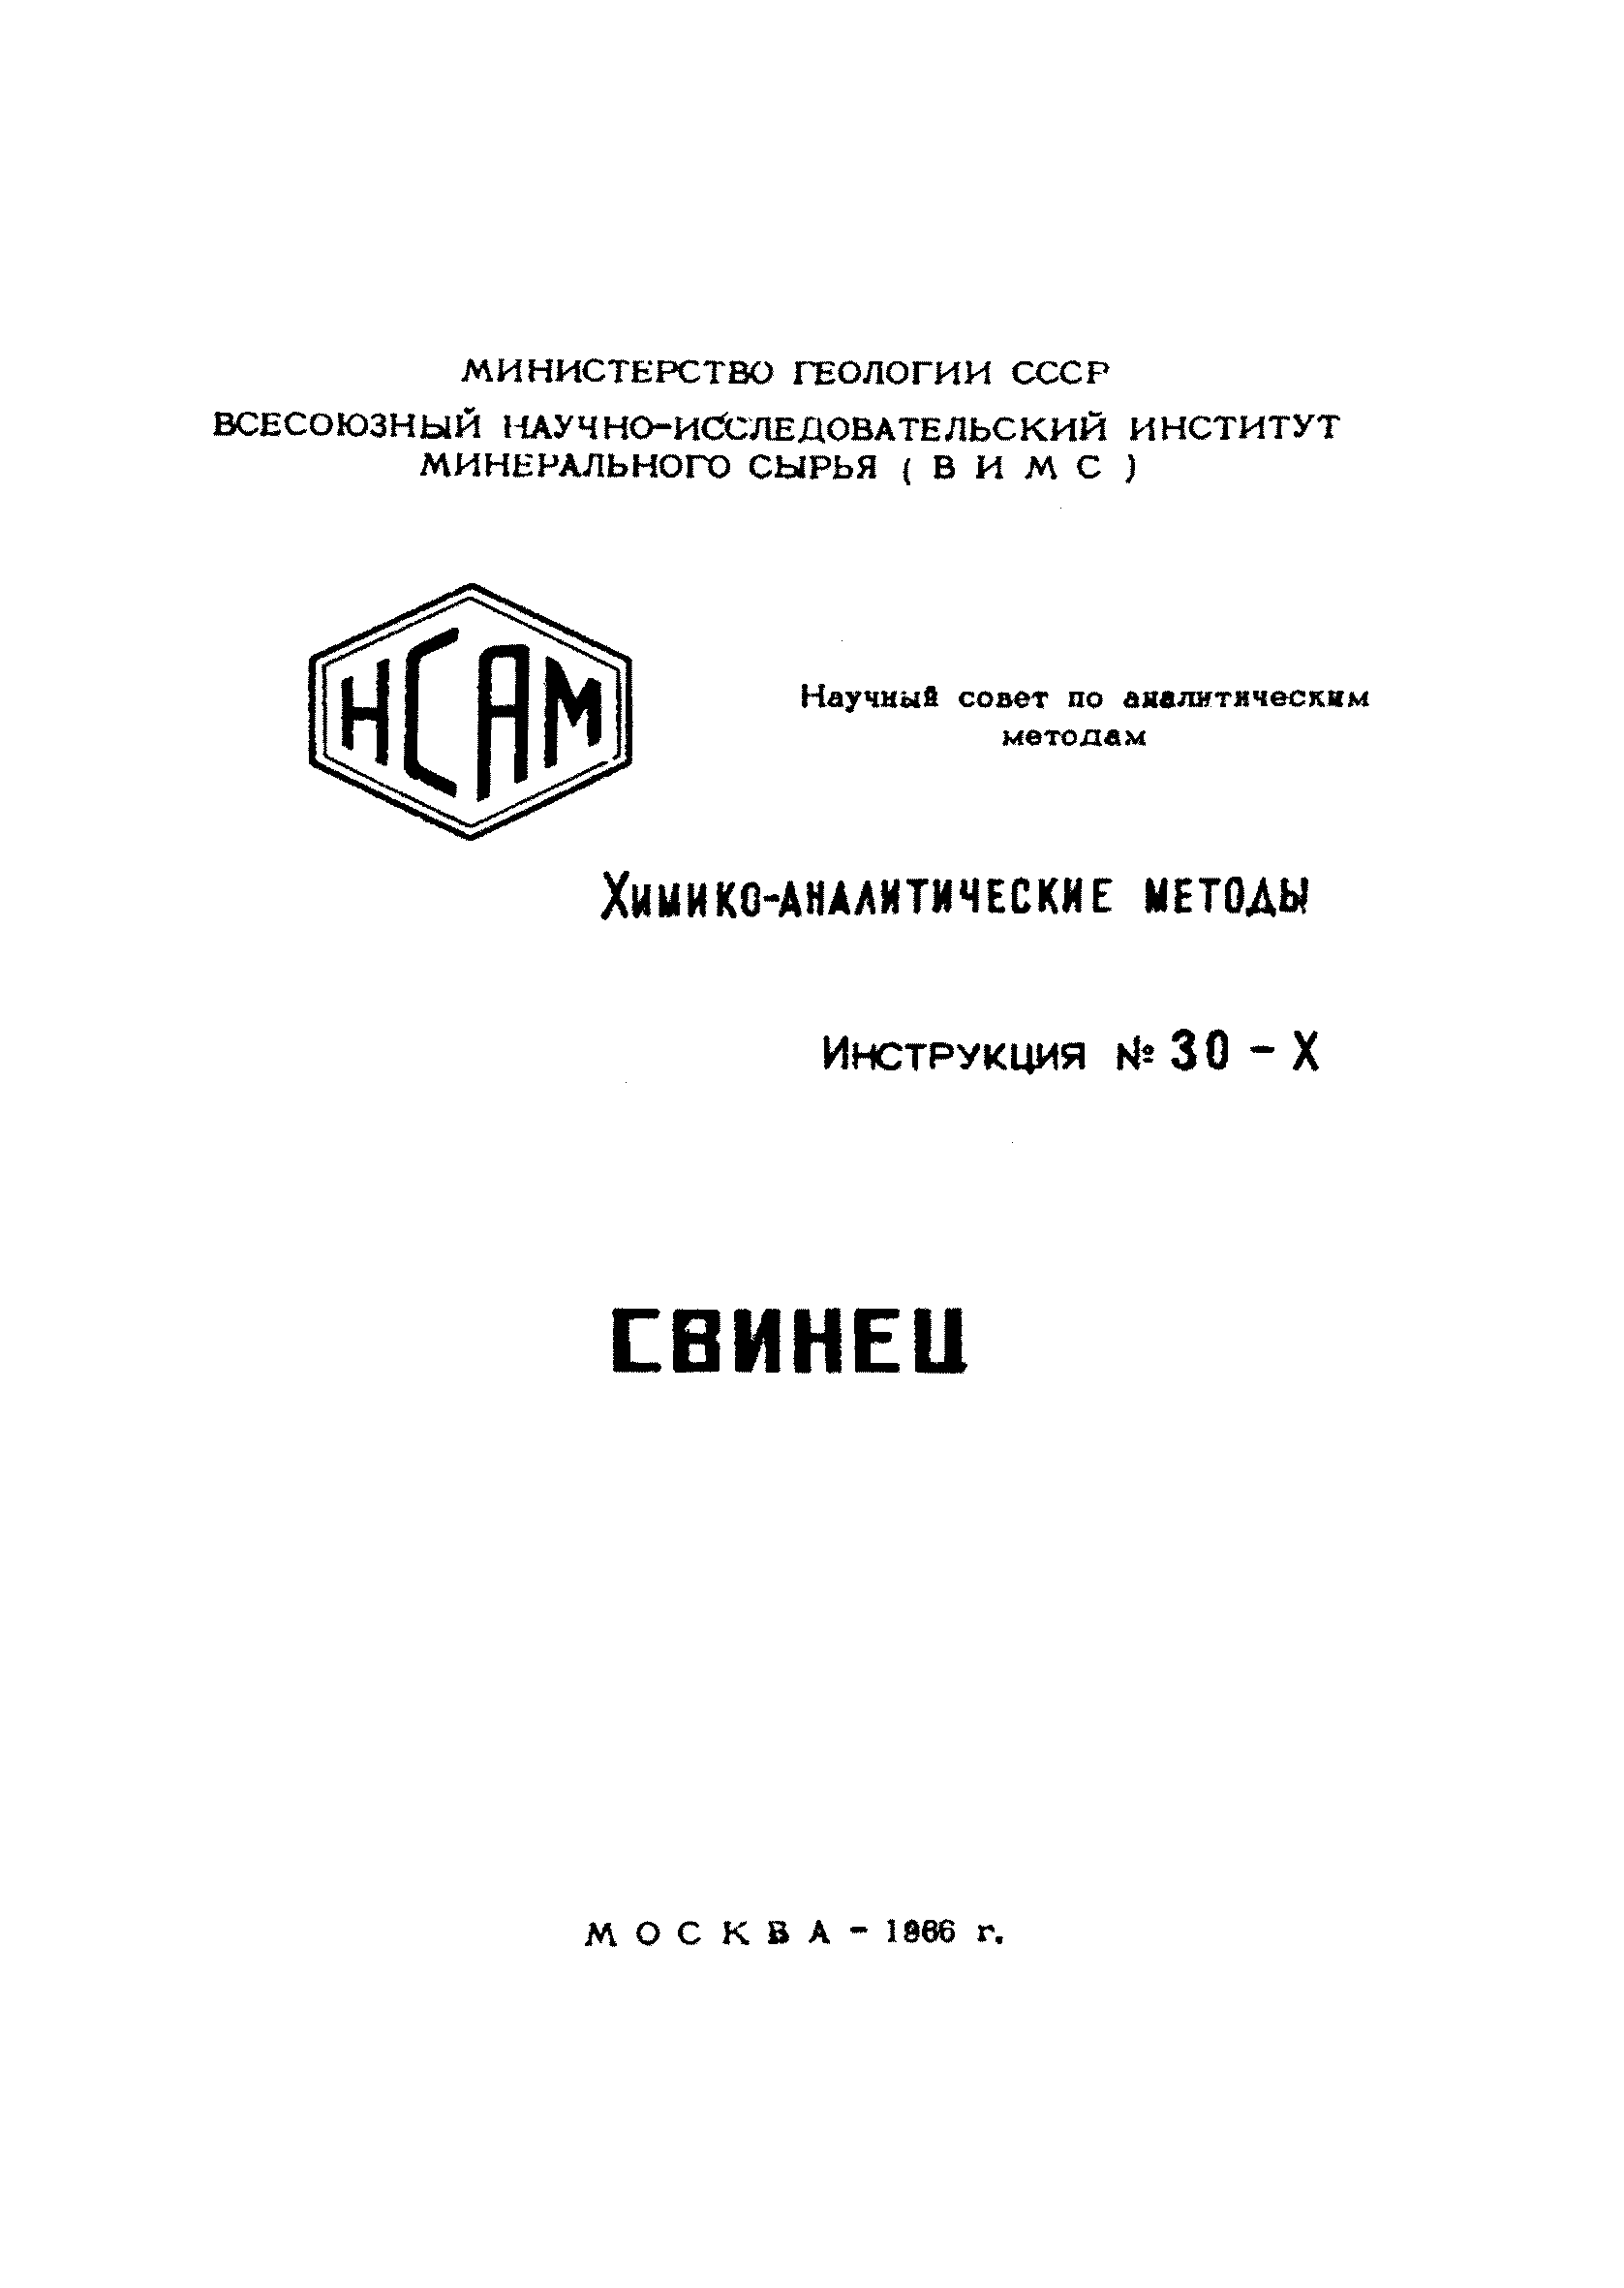 Инструкция НСАМ 30-Х